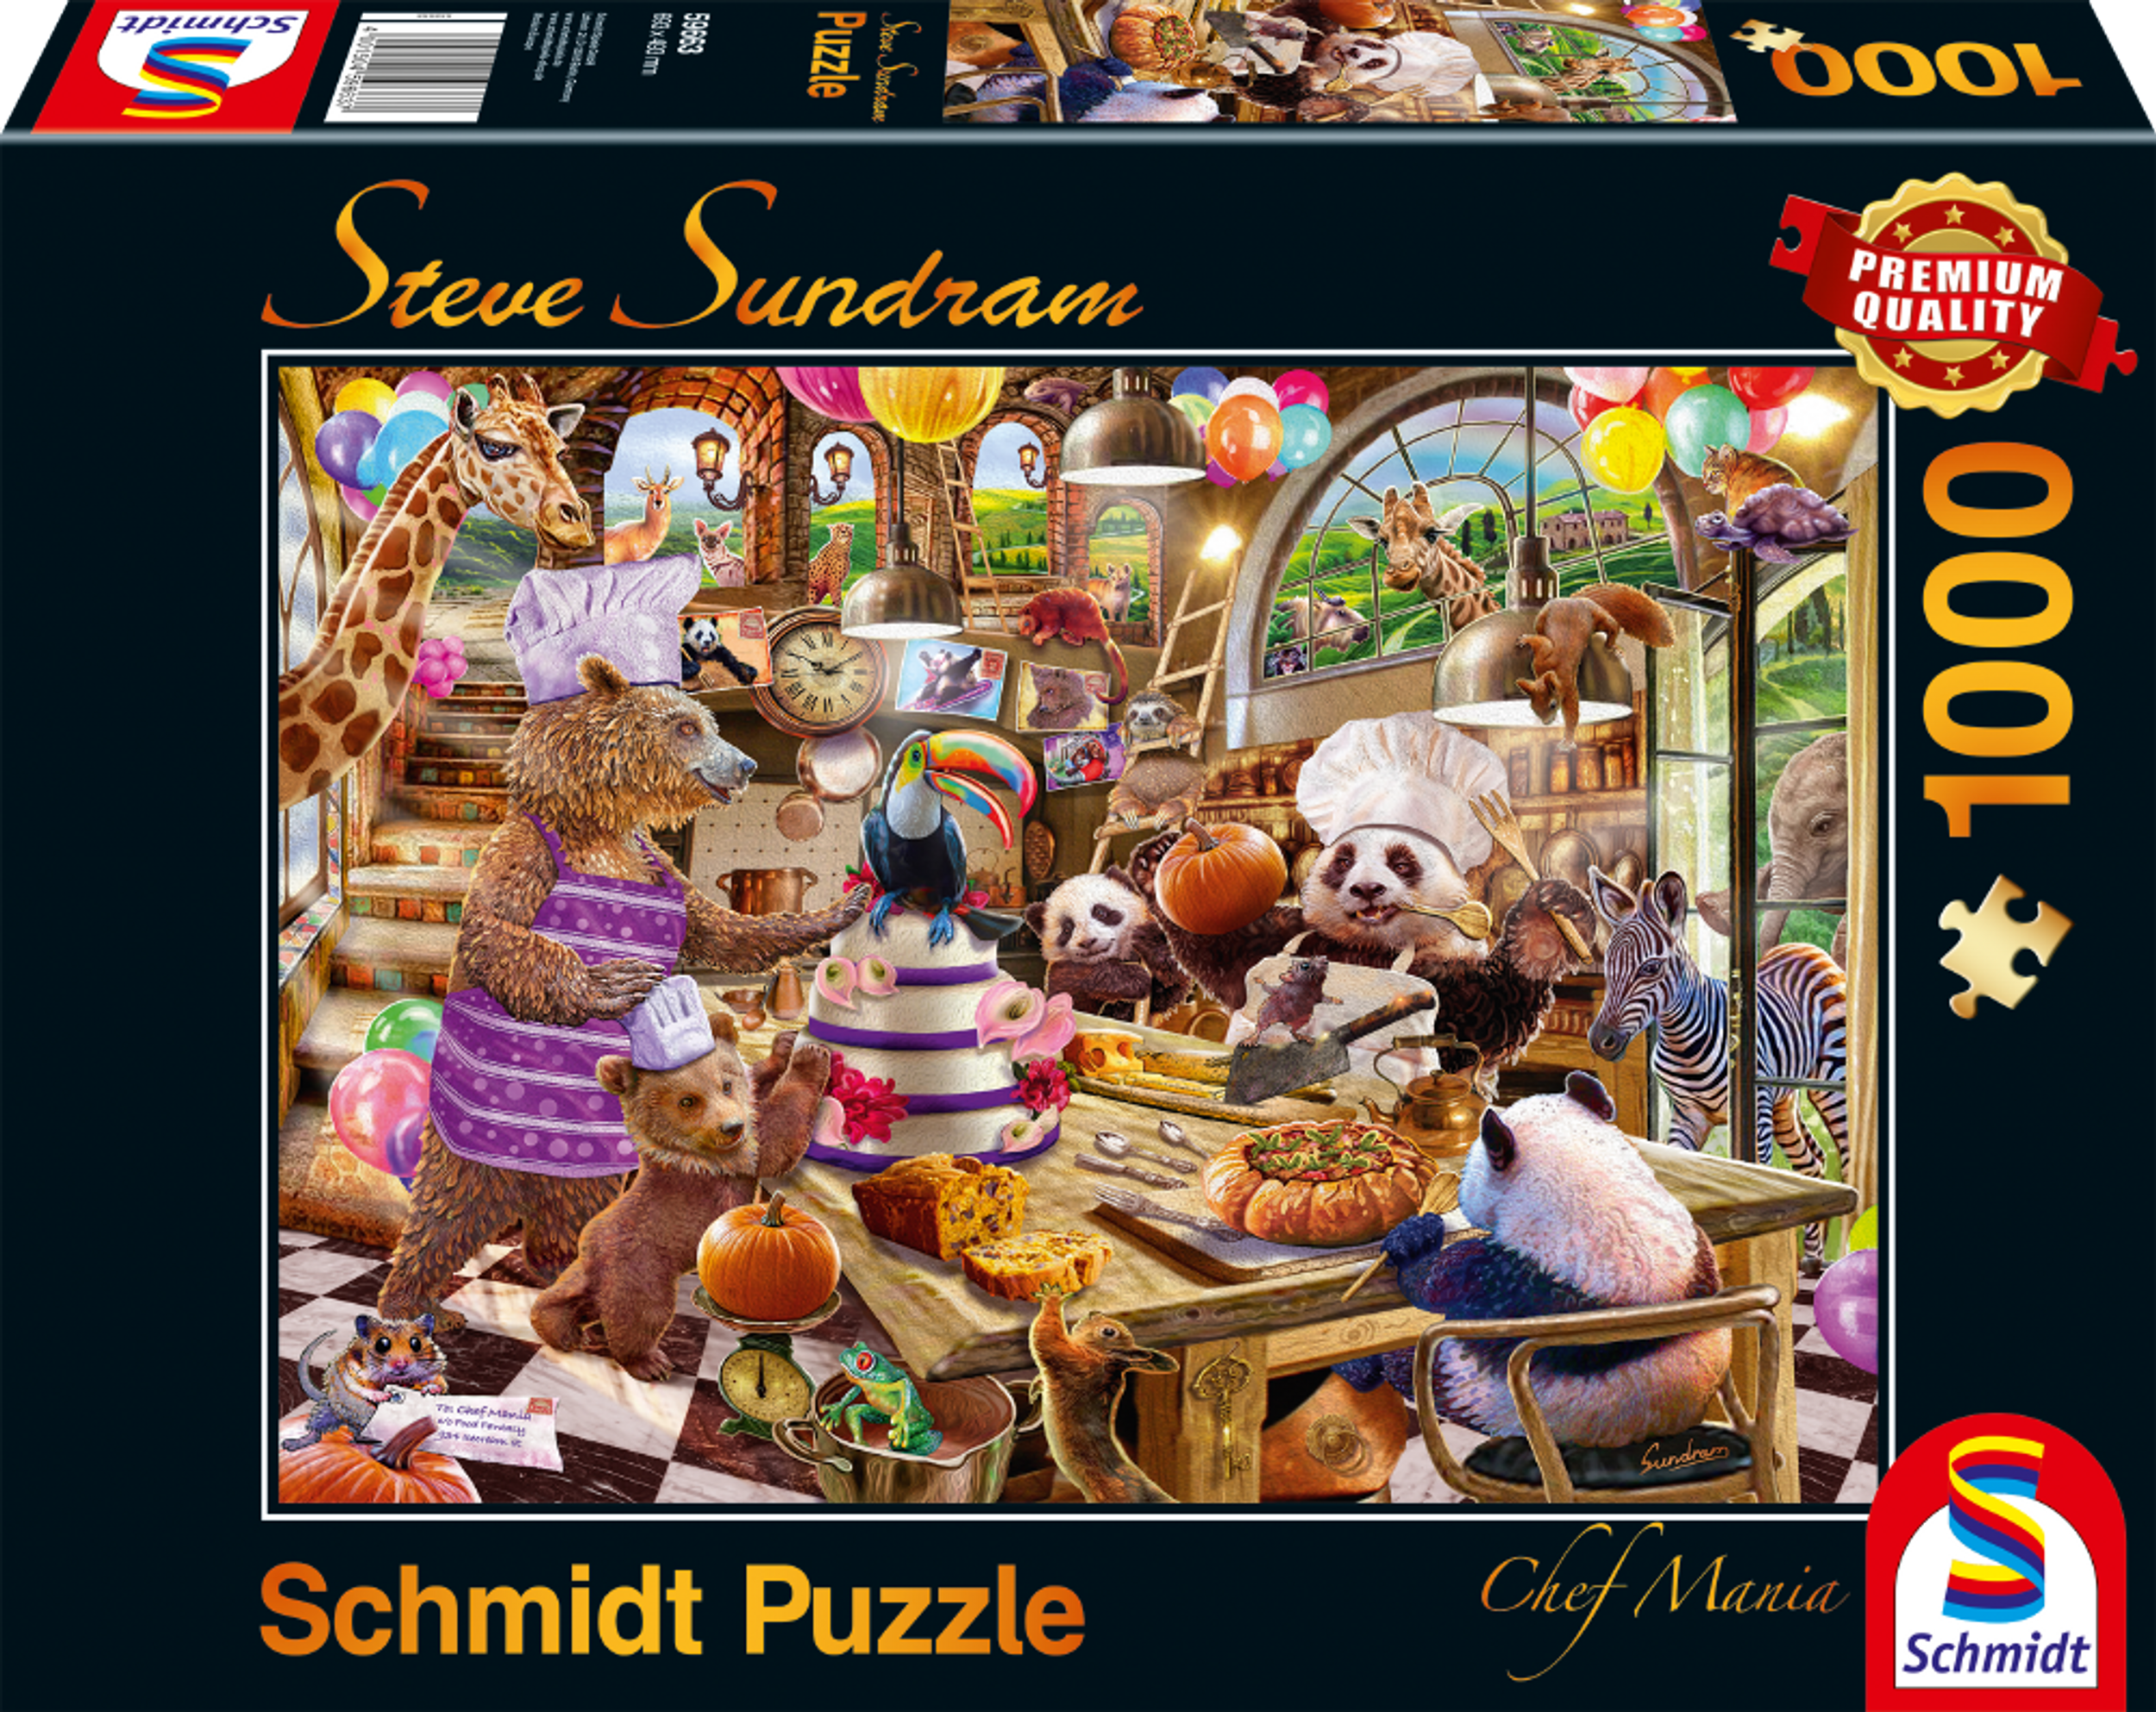 SCHMIDT SPIELE 49,3 1000 Chef Stücke cm Mania Spiele Puzzle Schmidt 69,3 x Puzzle